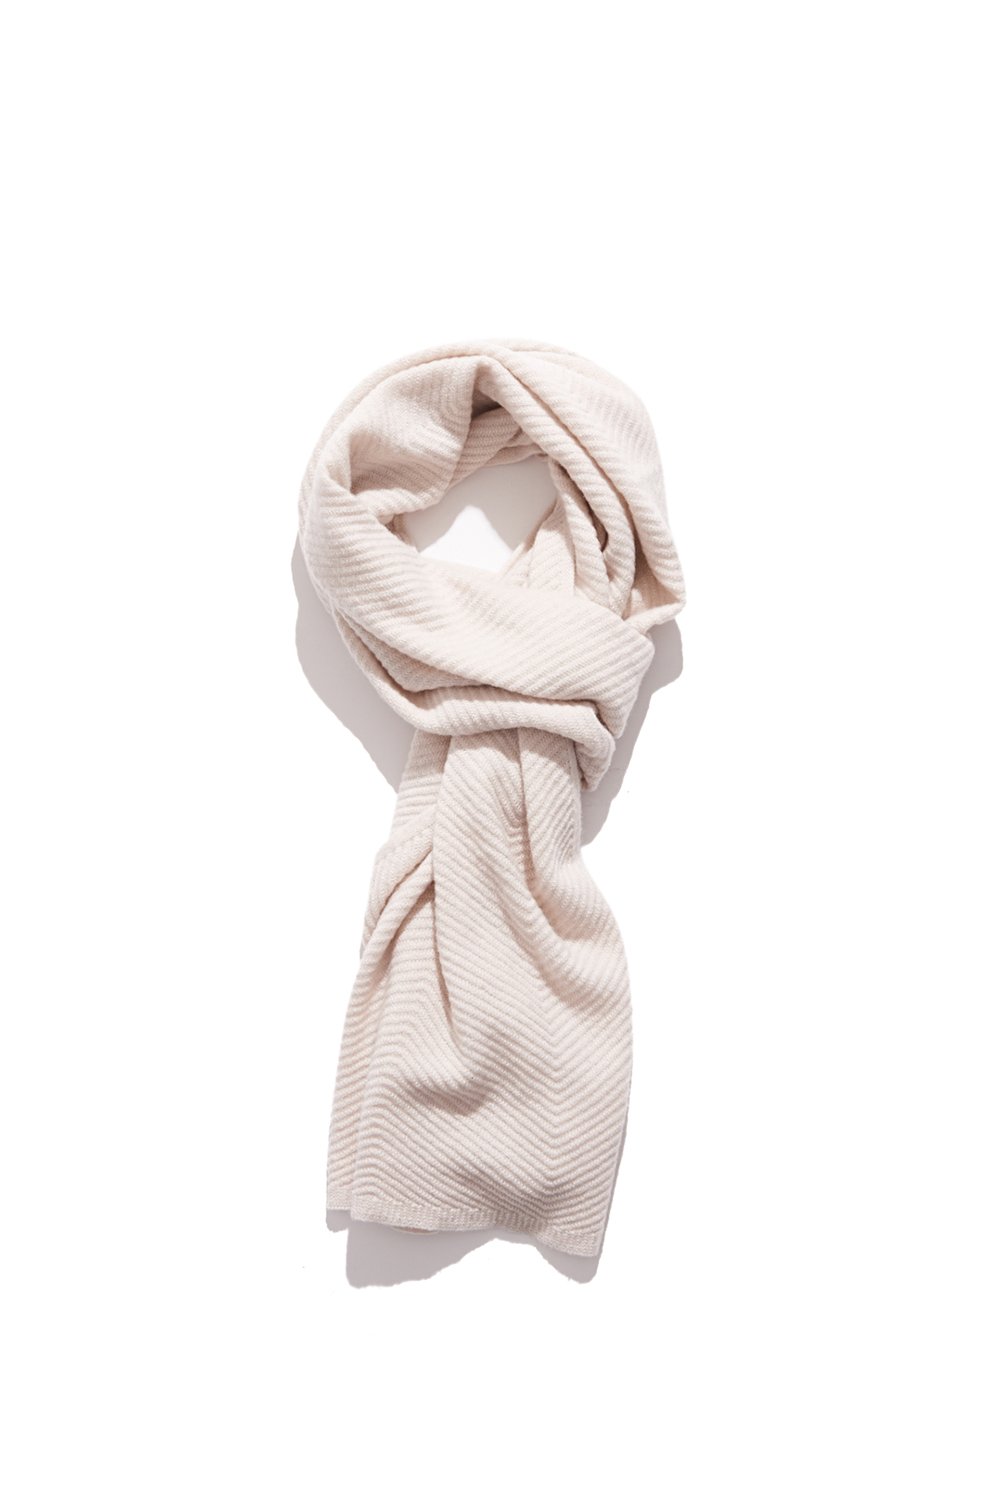 Premium pure cashmere100 whole-garment knitting shawl and scarf-Cream ivory